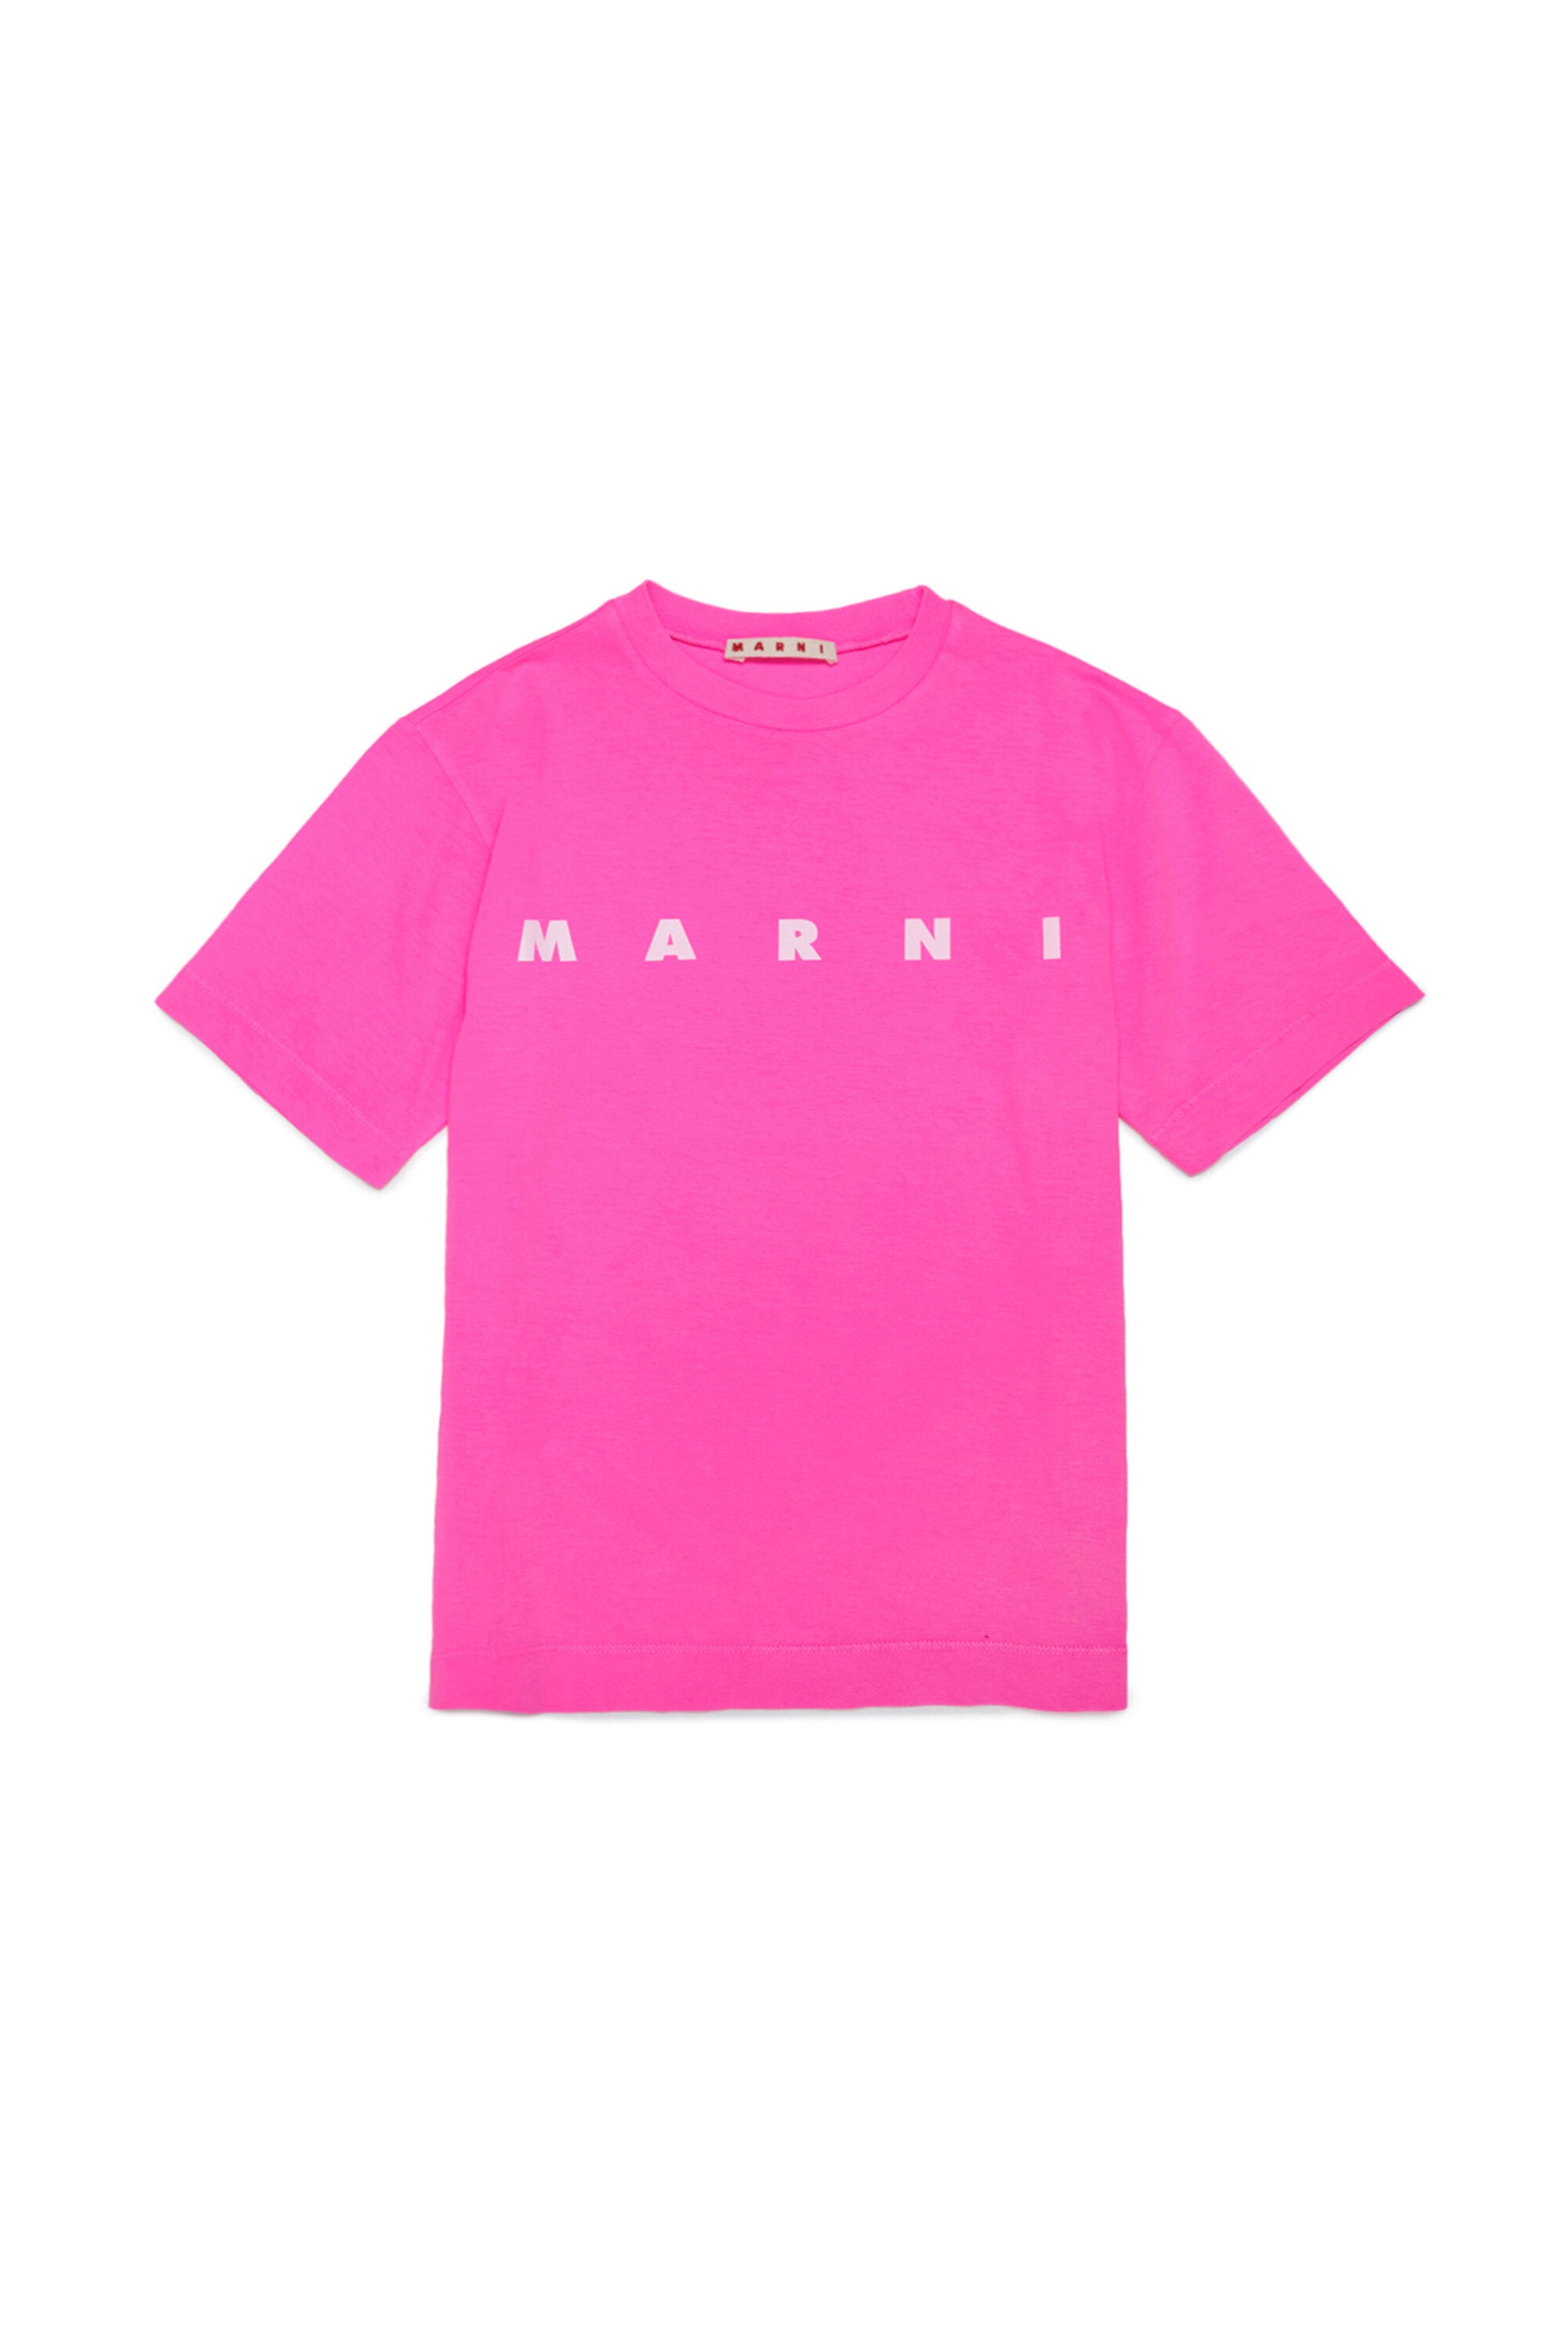 MARNI Logo-Print Cotton-Jersey T-Shirt for Men